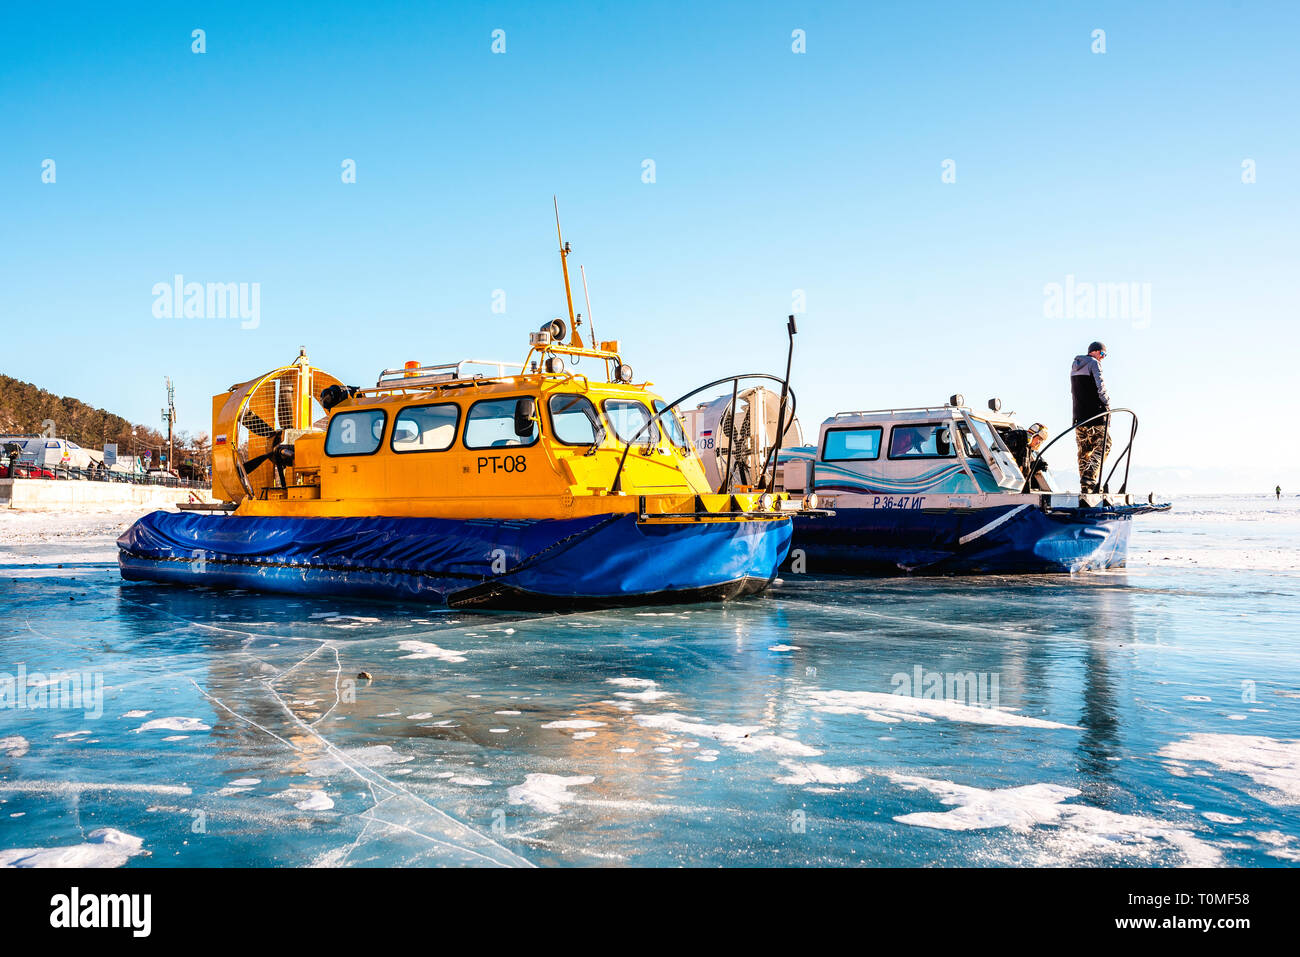 Air cushion boats on the frozen Lake Baikal, Siberia, Russia Stock Photo